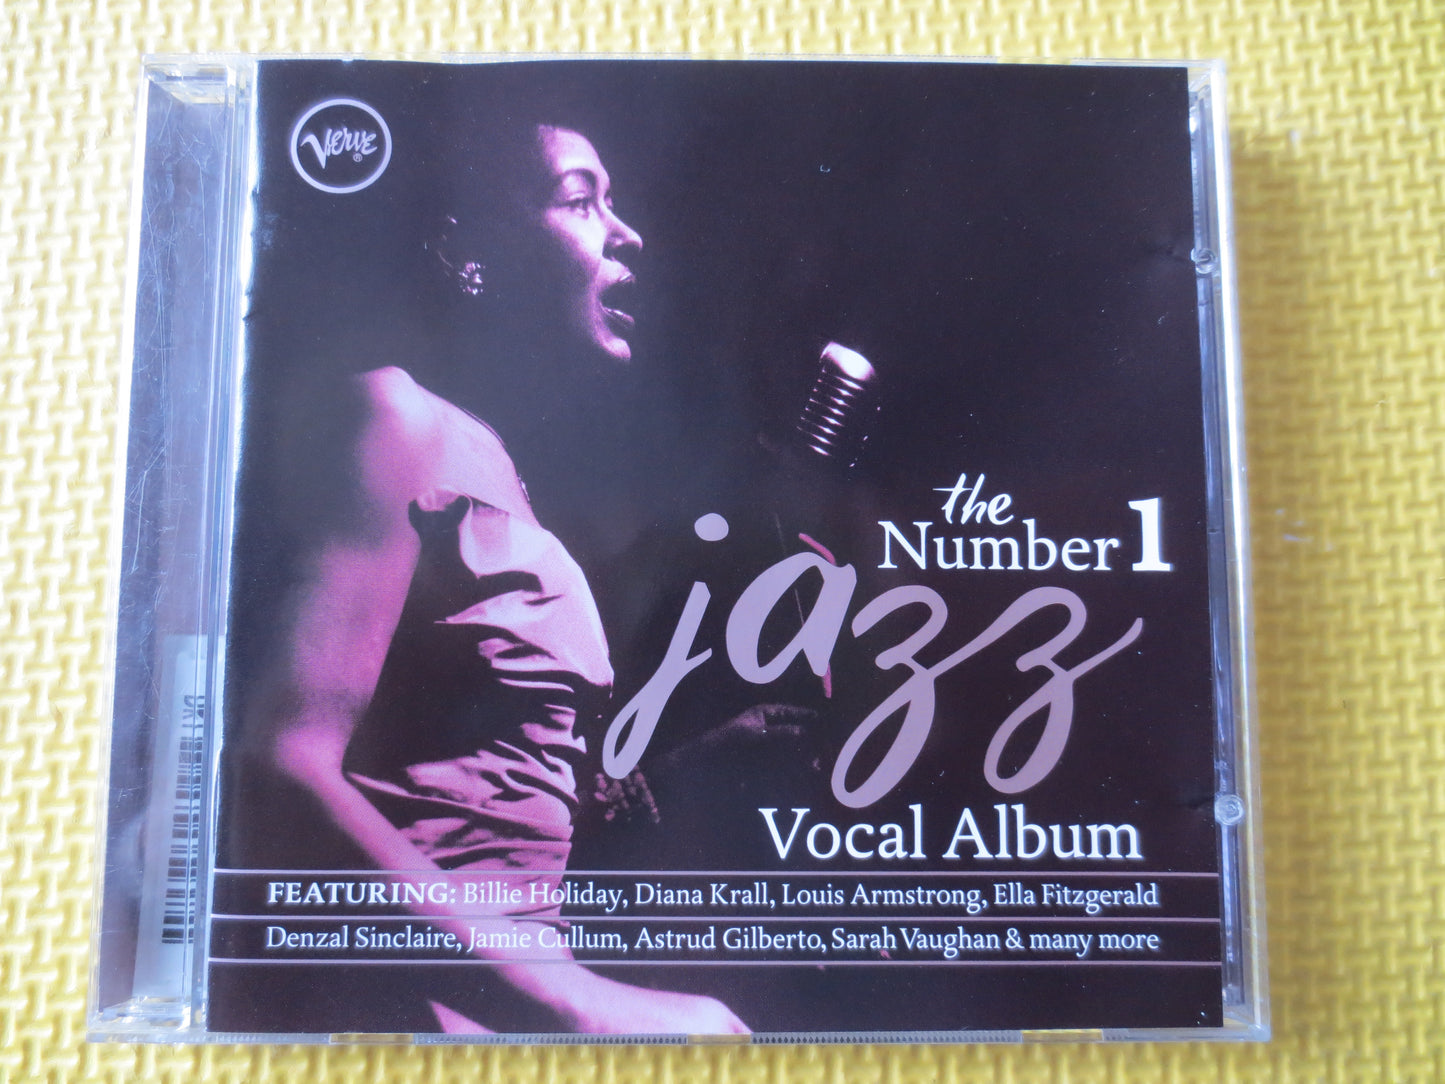 NUMBER 1 JAZZ Cd, Number 1 Jazz Music, Jazz Vocal Cd, Jazz Music Cd, Jazz Cd, Swing Cd, Big Band Cd, Cds, Jazz Compact Discs